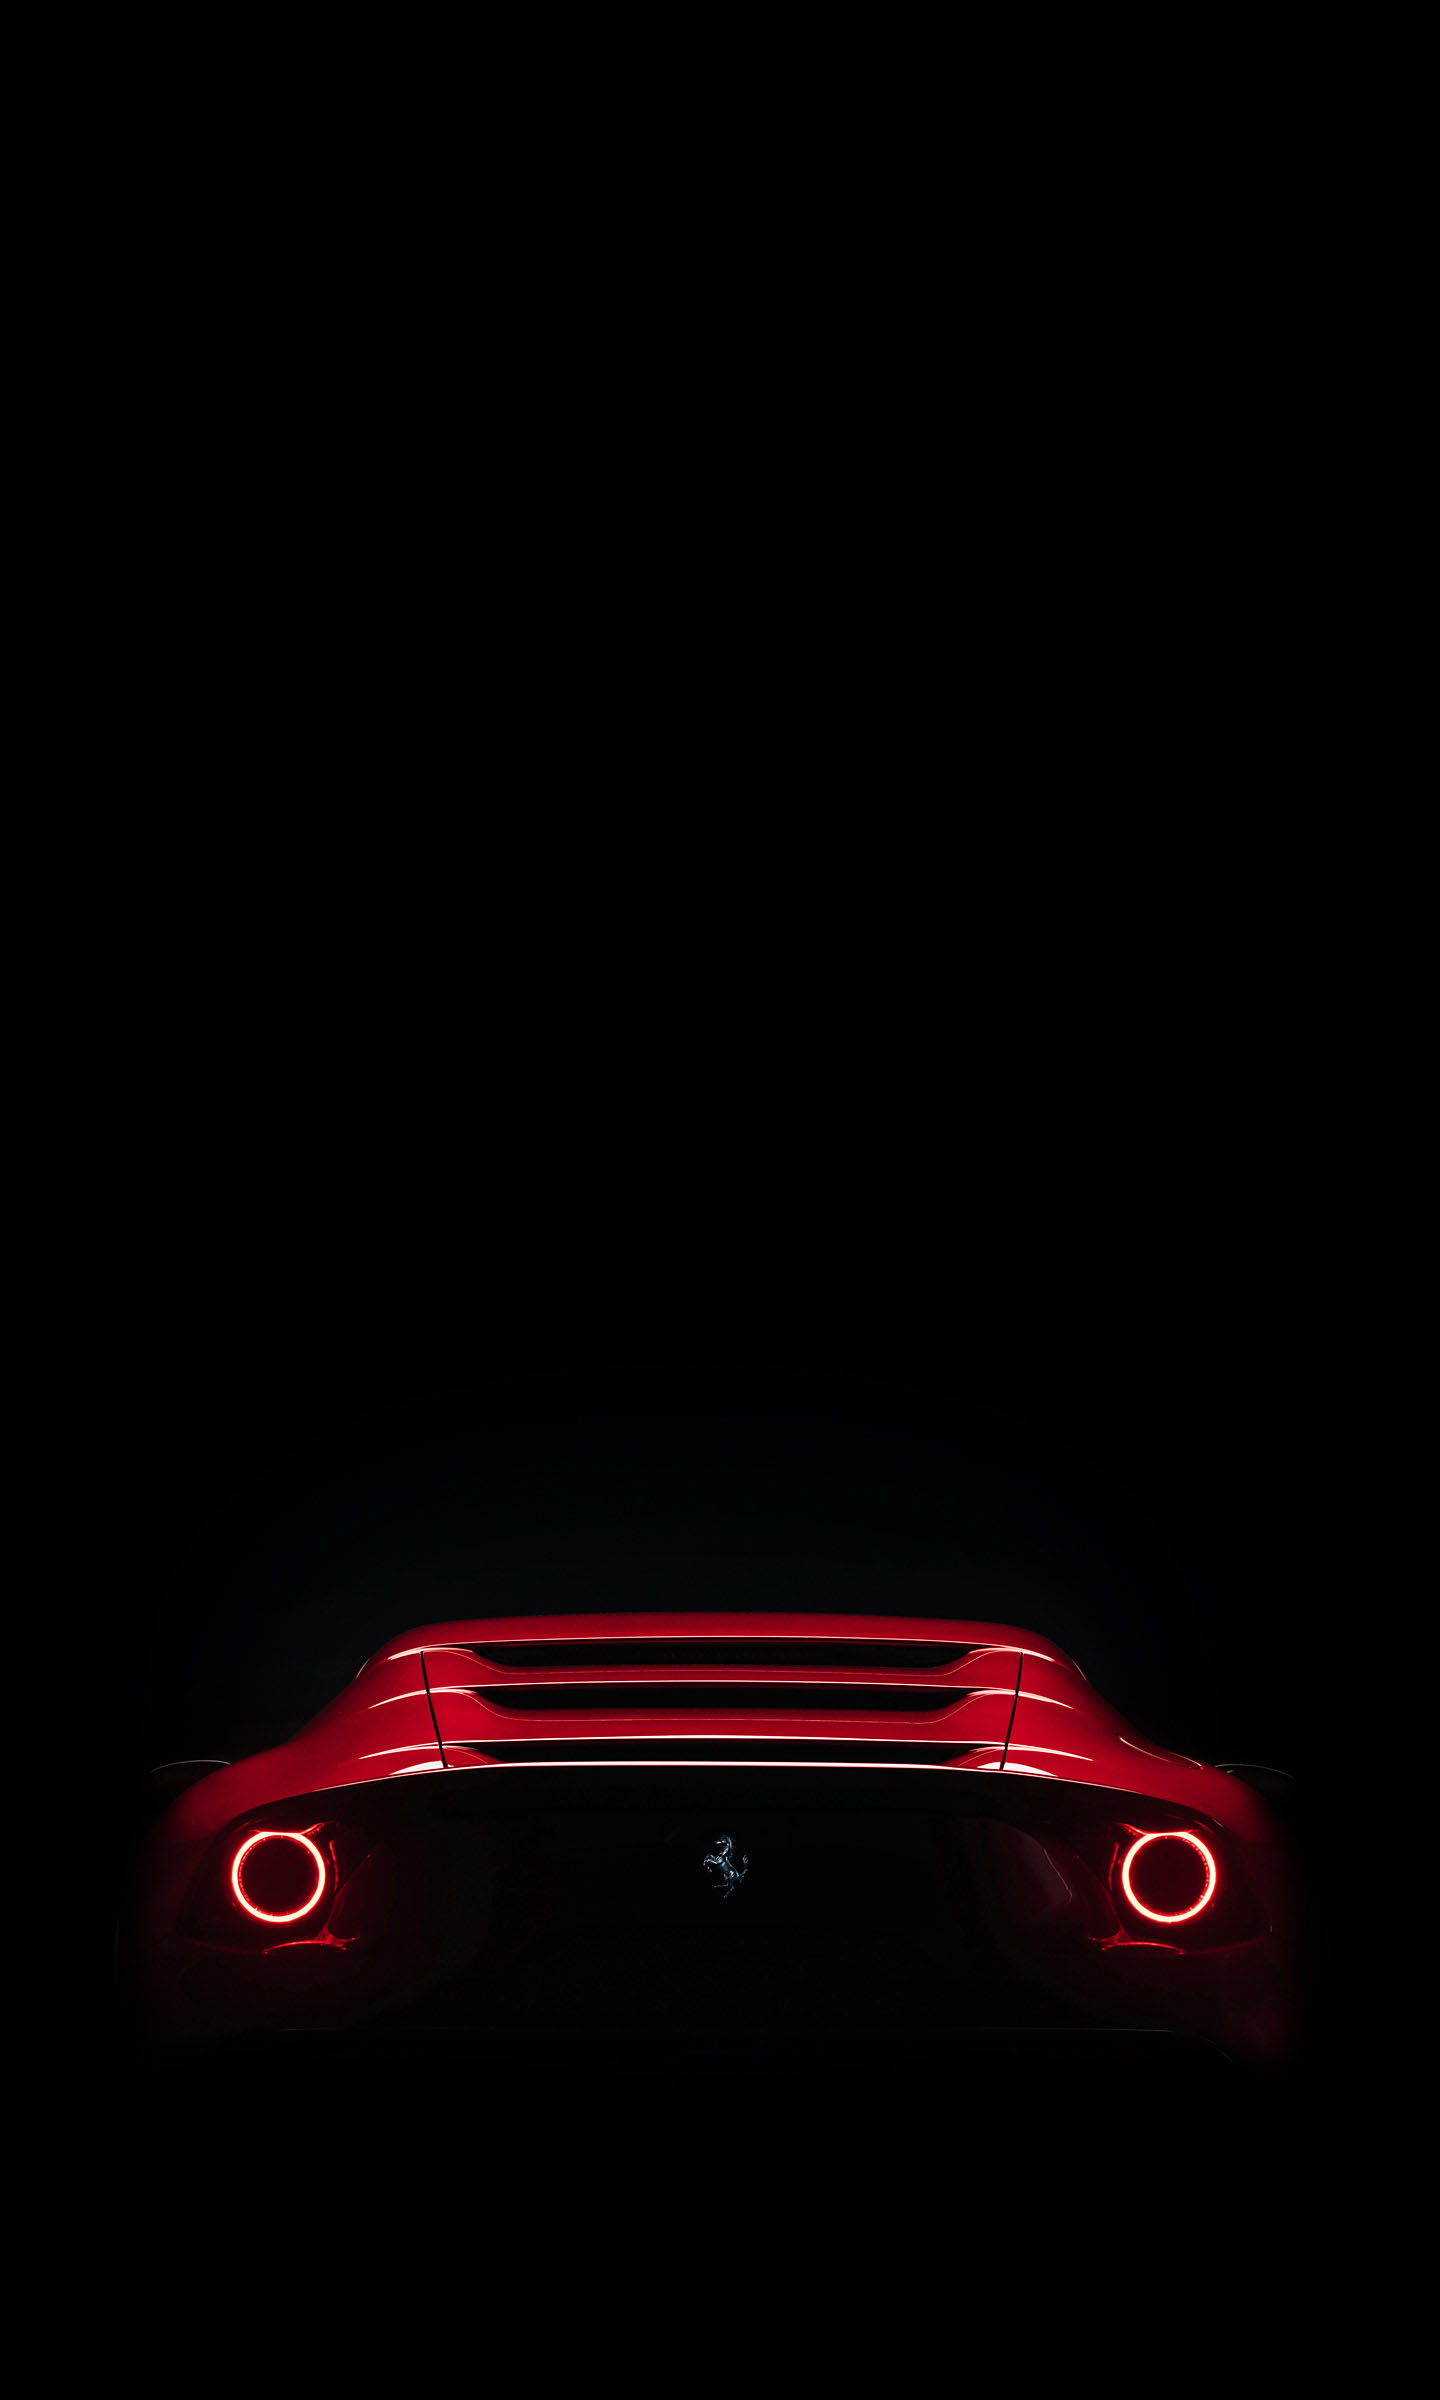  2020 Ferrari Omologata Wallpaper.